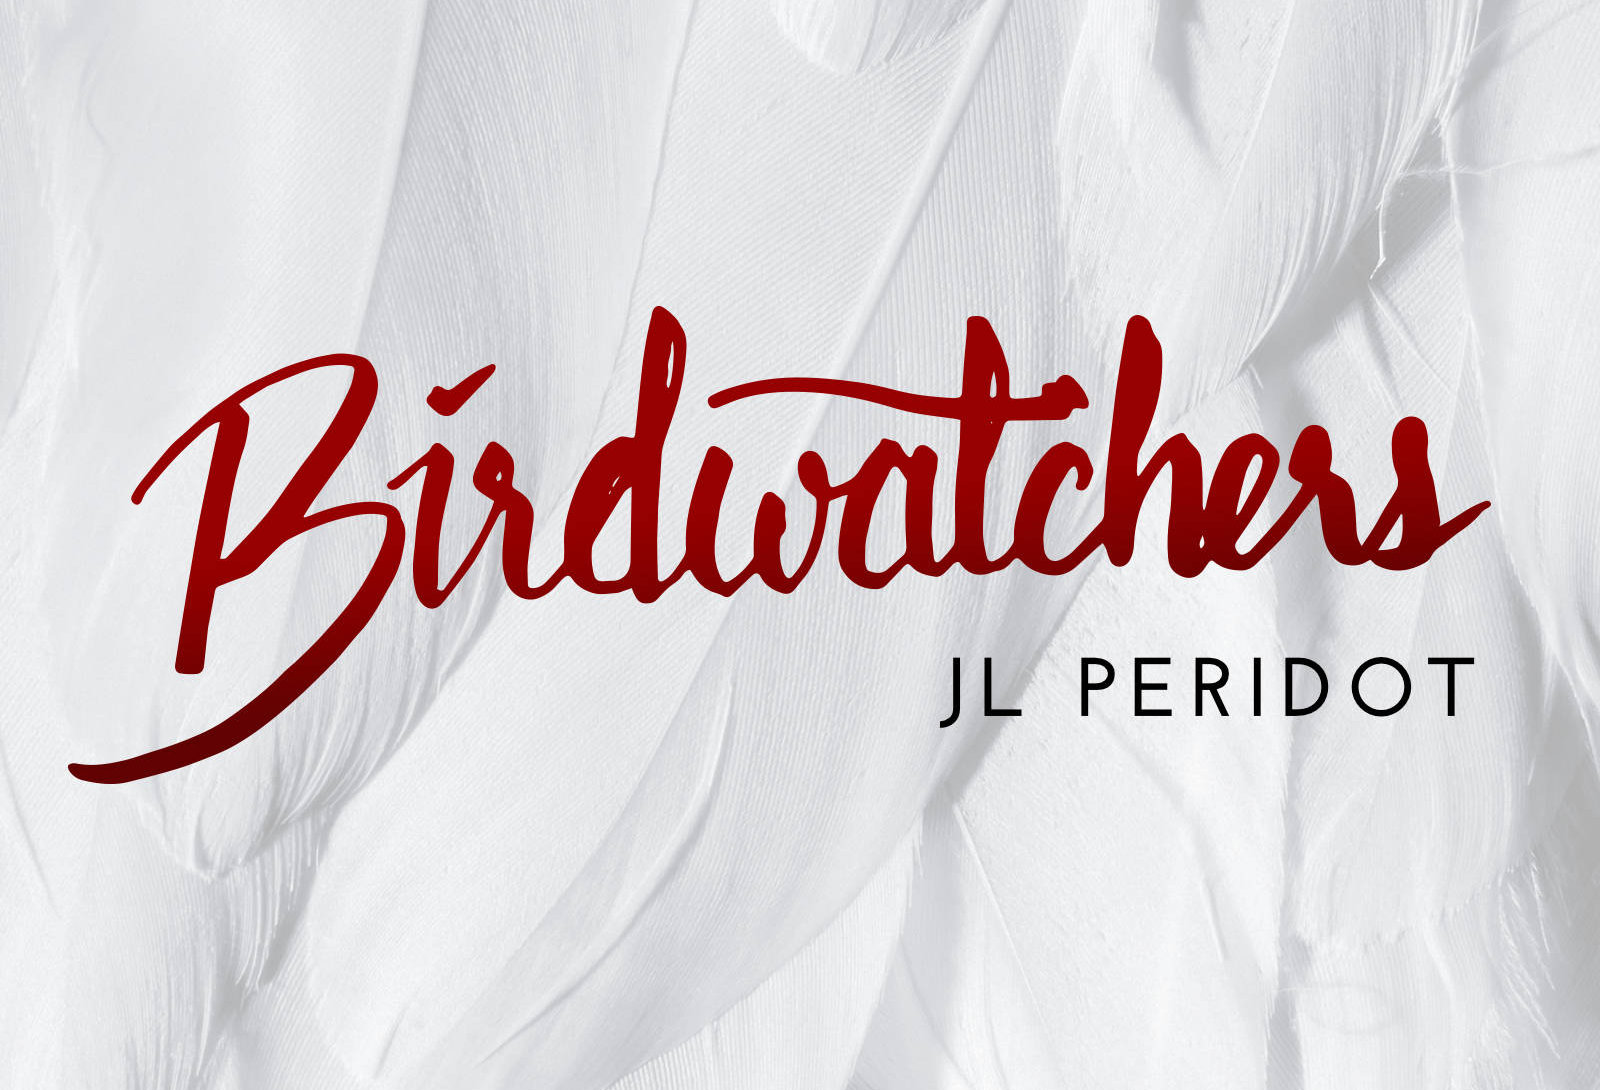 Text in image - Birdwatchers by JL Peridot